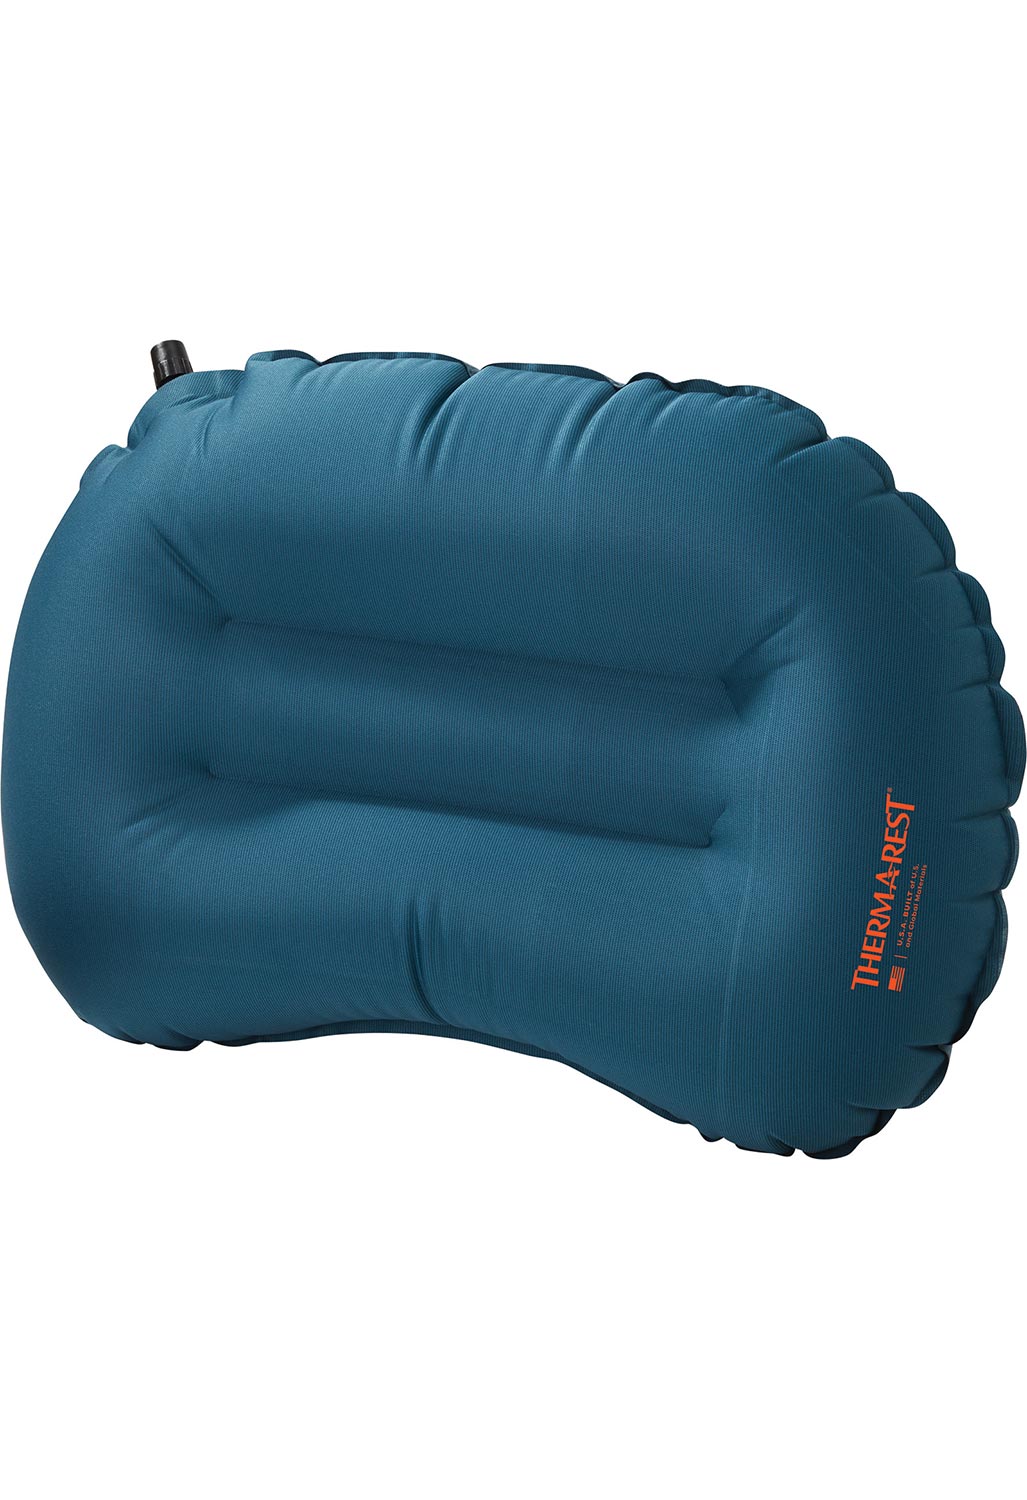 Therm-a-Rest Air Head Lite Pillow - Deep Pacific